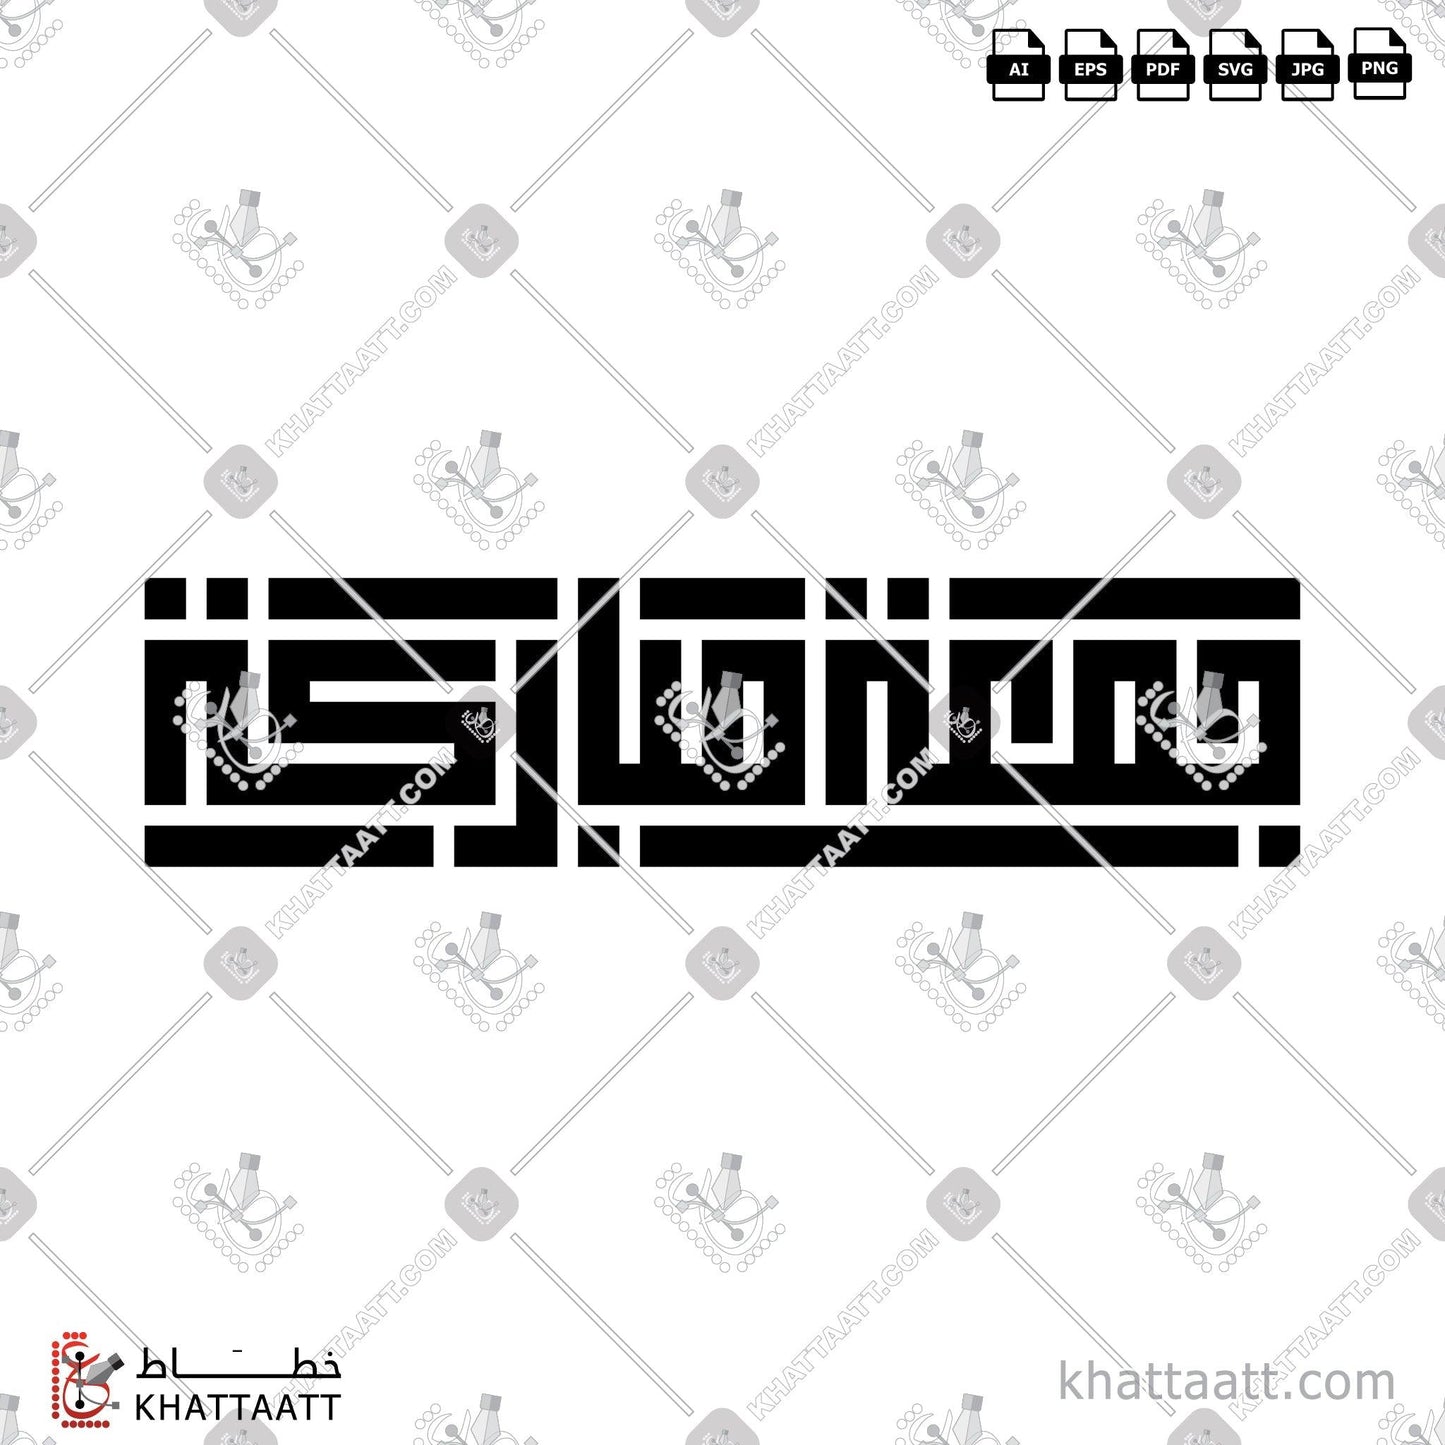 Digital Arabic Calligraphy Vector of Juma'a Mubarakah - جمعة مباركة in Kufi - الخط الكوفي